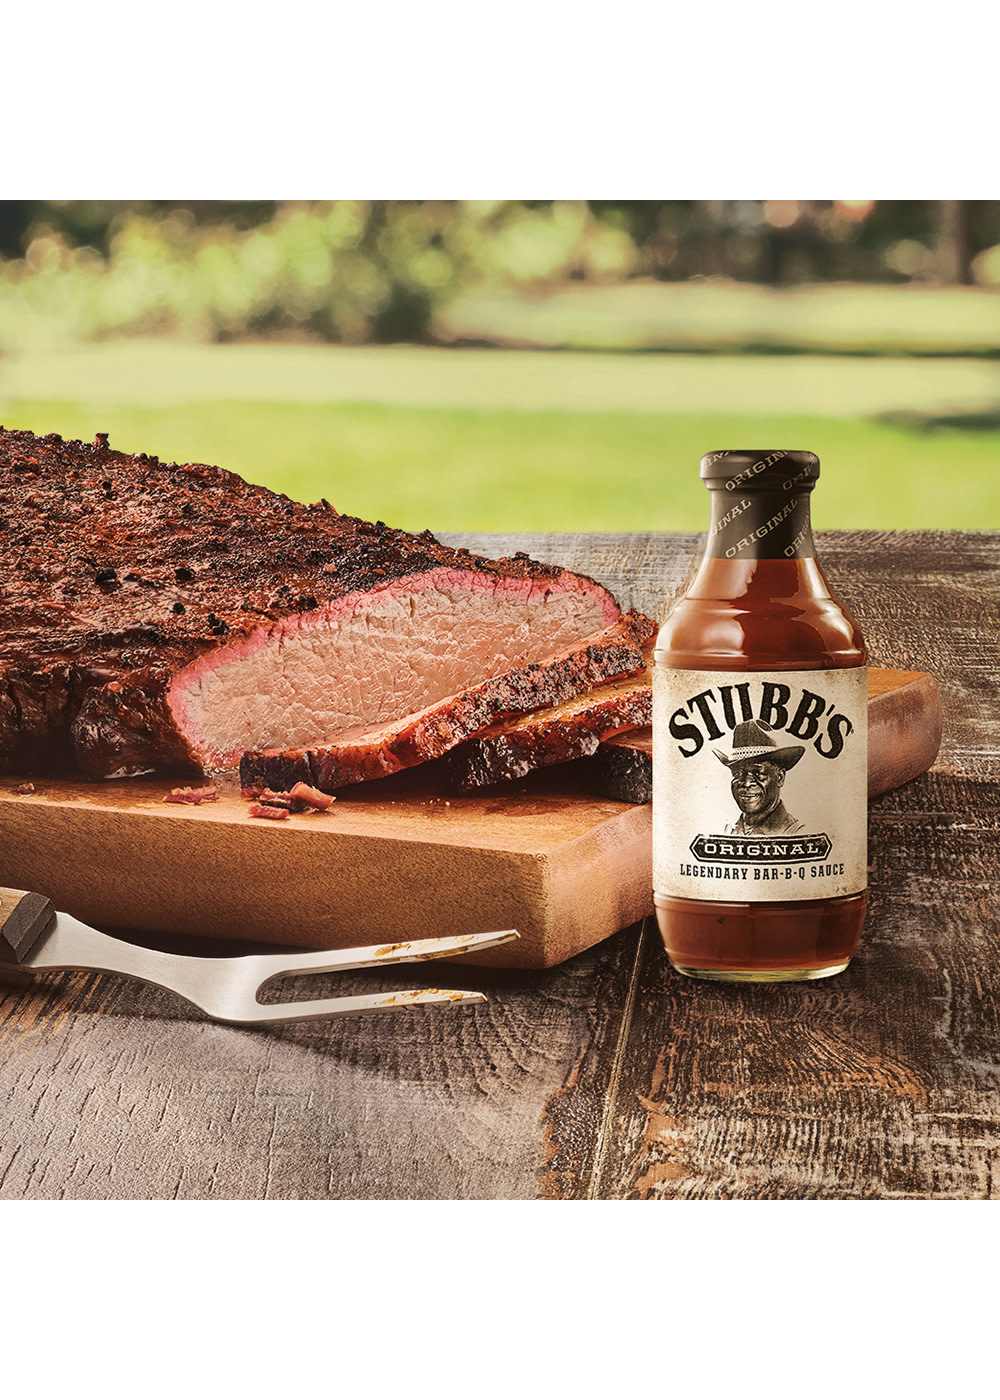 Stubb's Original Barbecue Sauce; image 6 of 9